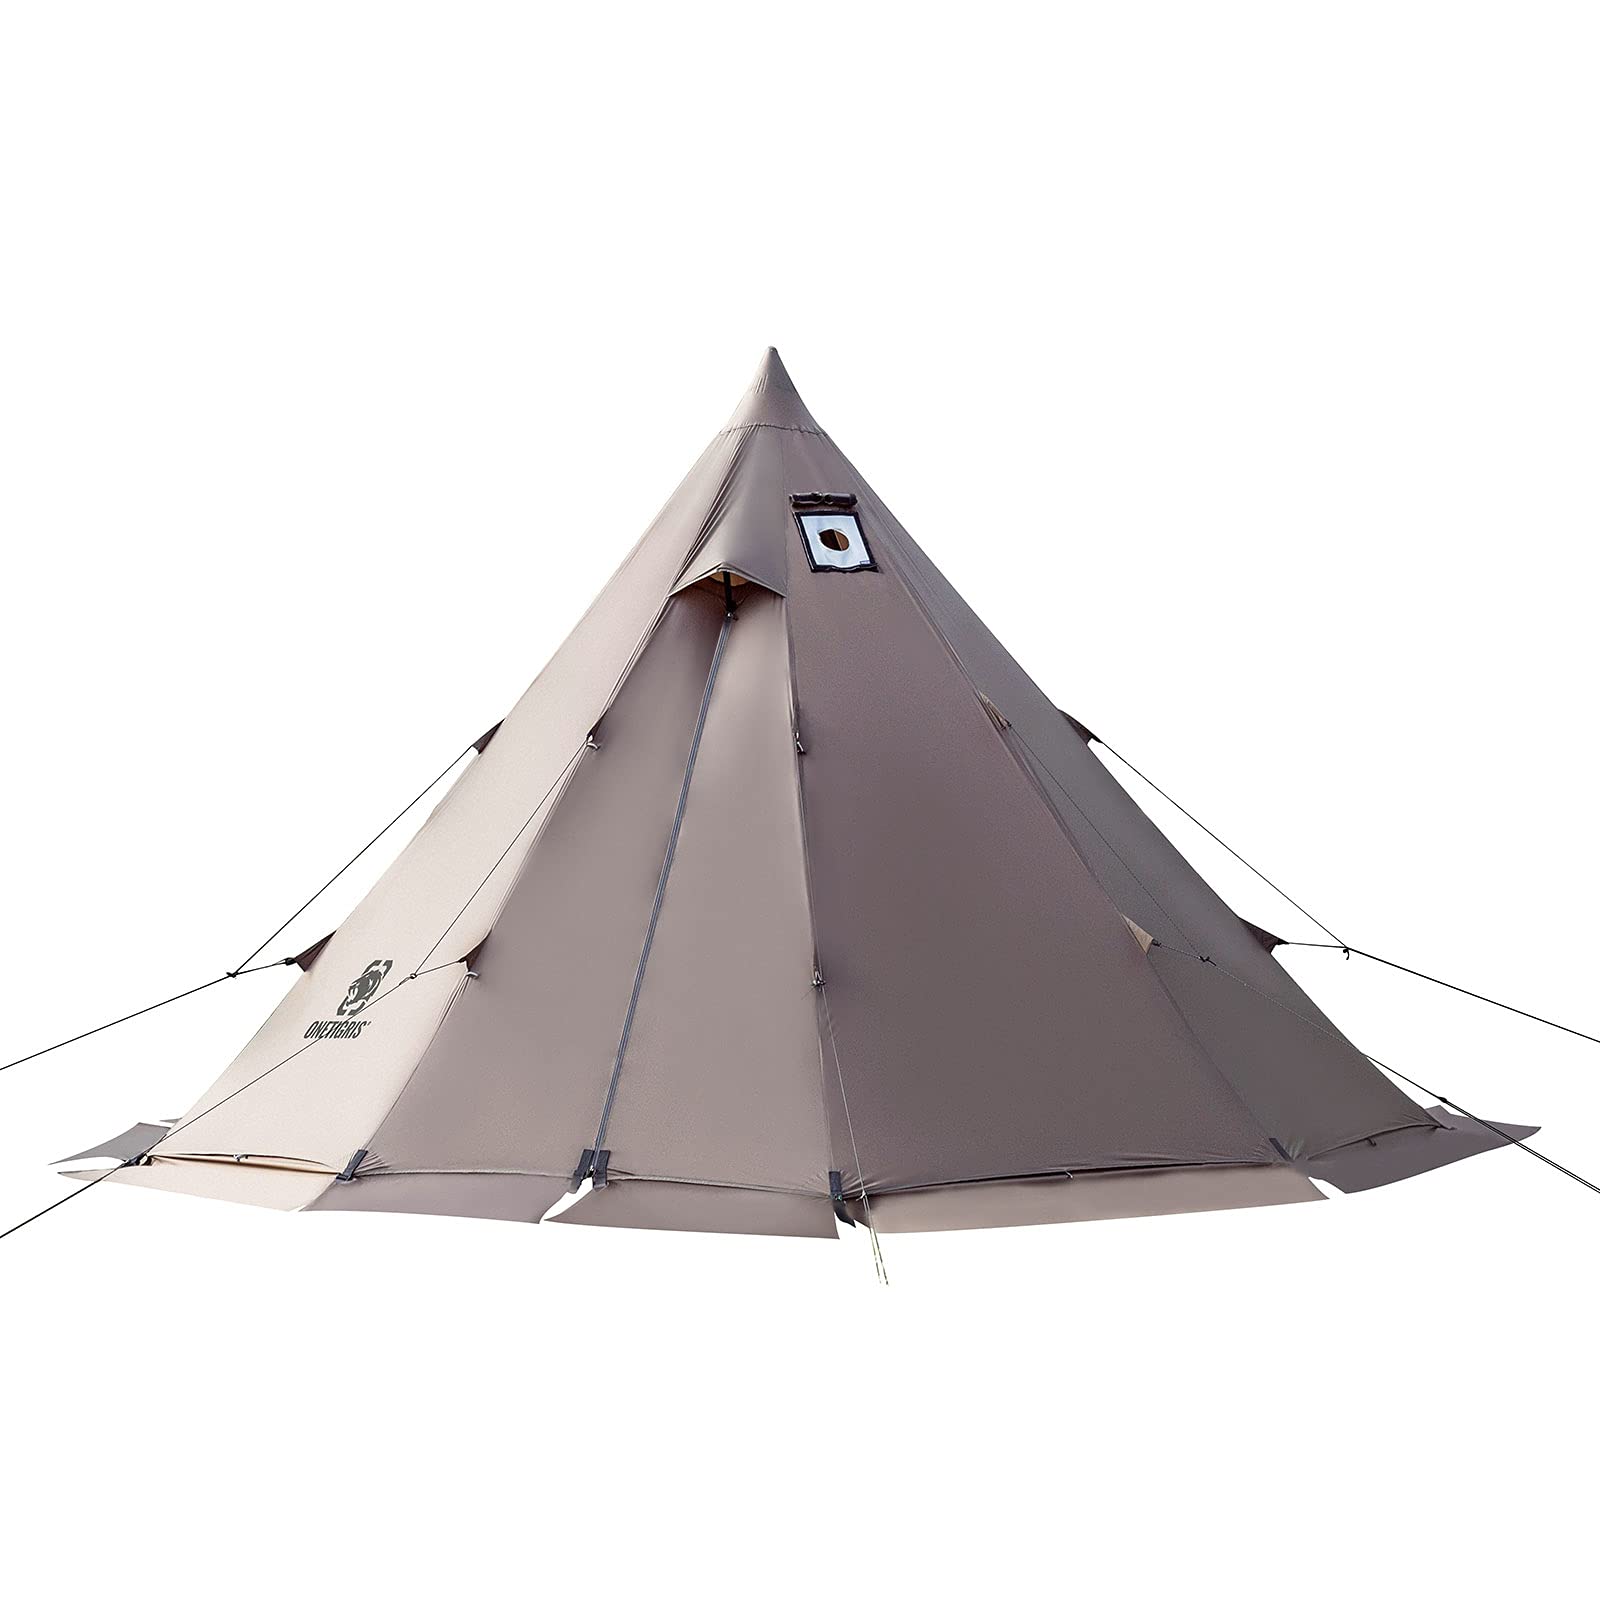 <a href="https://www.amazon.com/dp/B09B249MHJ?%3Fth=1&psc=1&tag=thecampfire0d-20">OneTigris Rock Fortress Hot Tent</a>